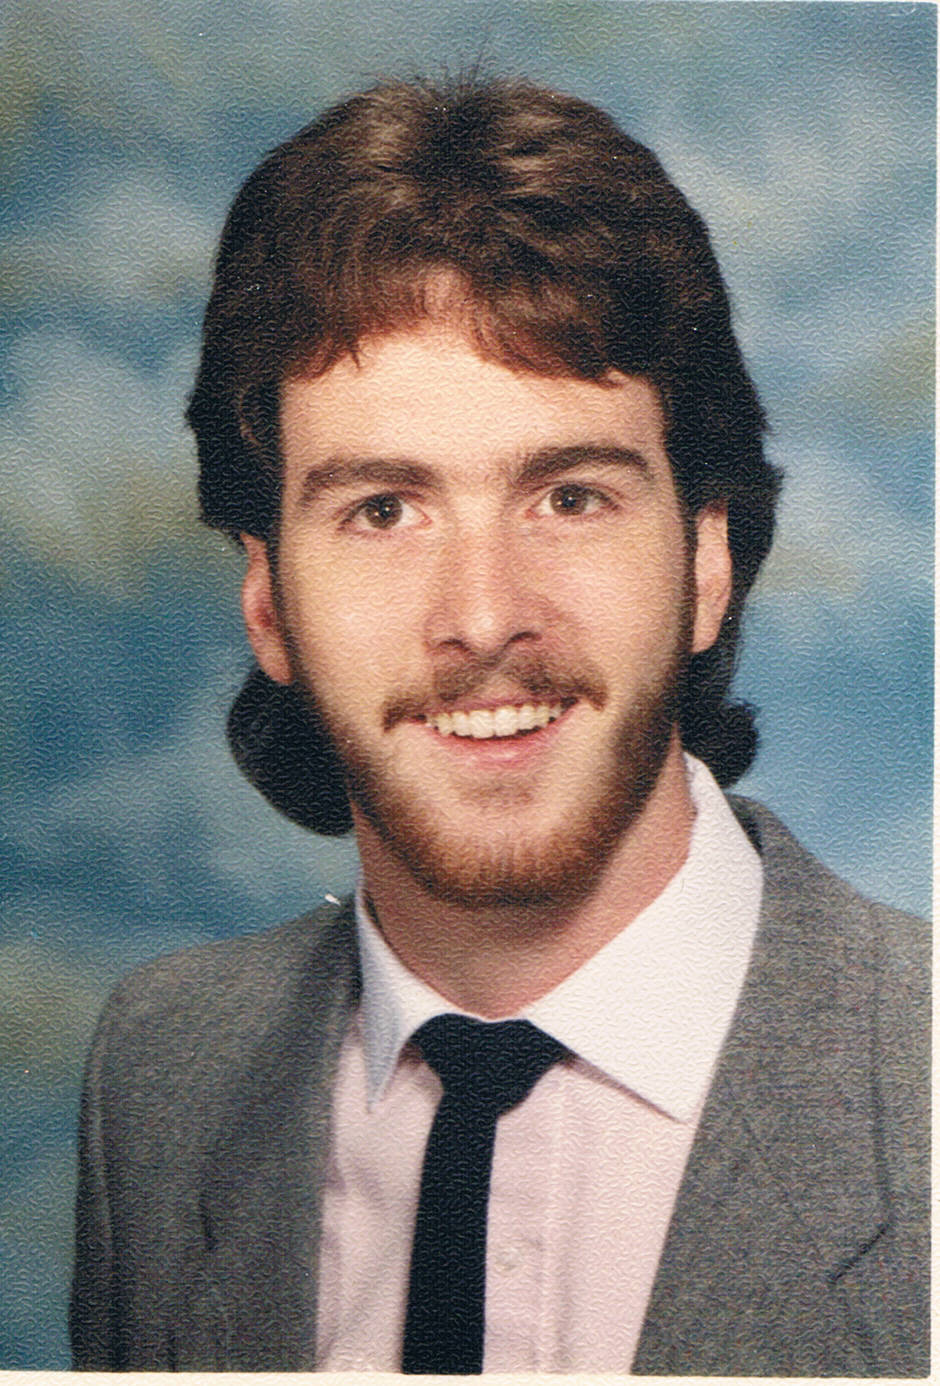 1985 Mark college